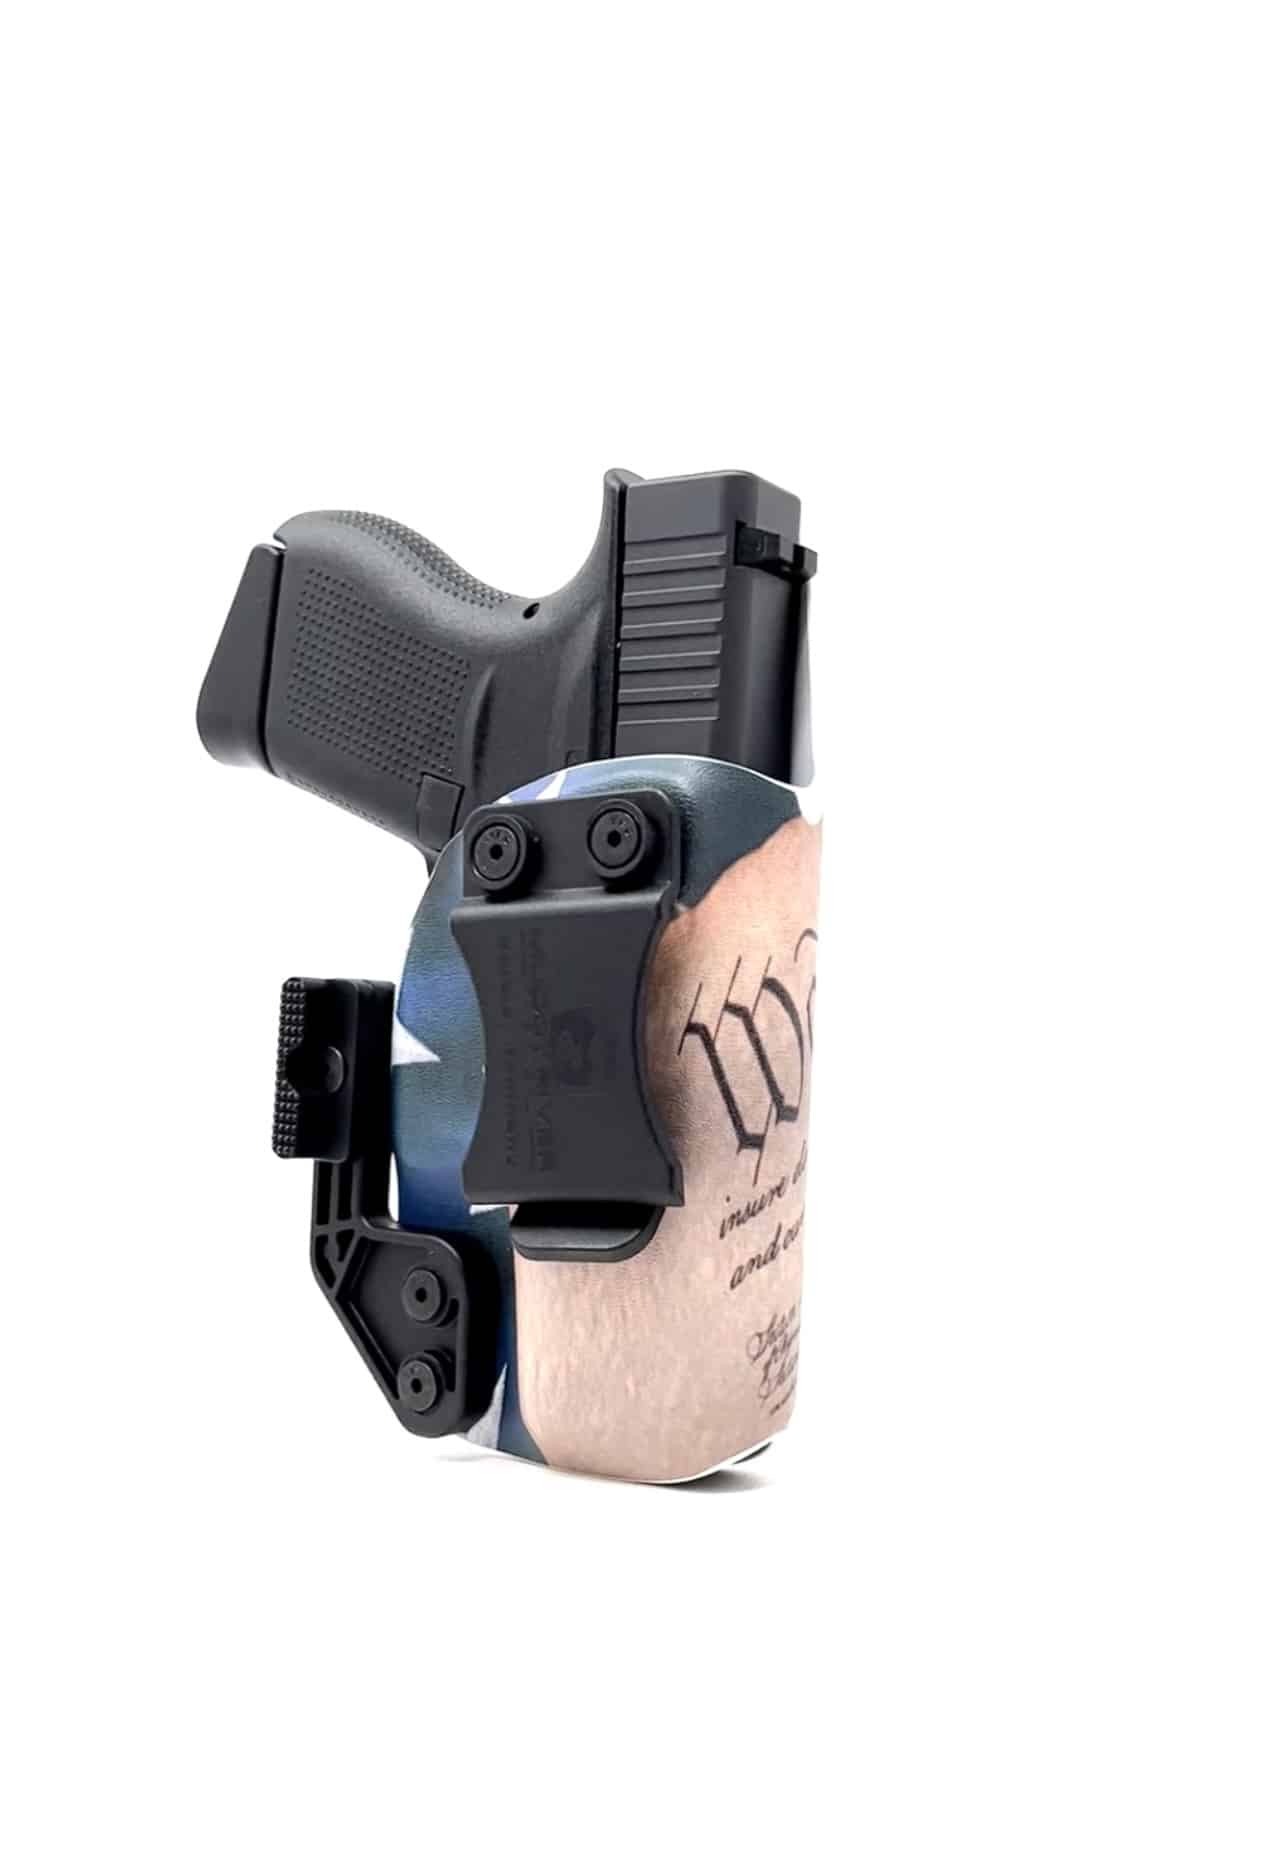 50" Adjustable Camo TACTICAL BELT Gun Holster Magazine Pouch Combat Duty Police 